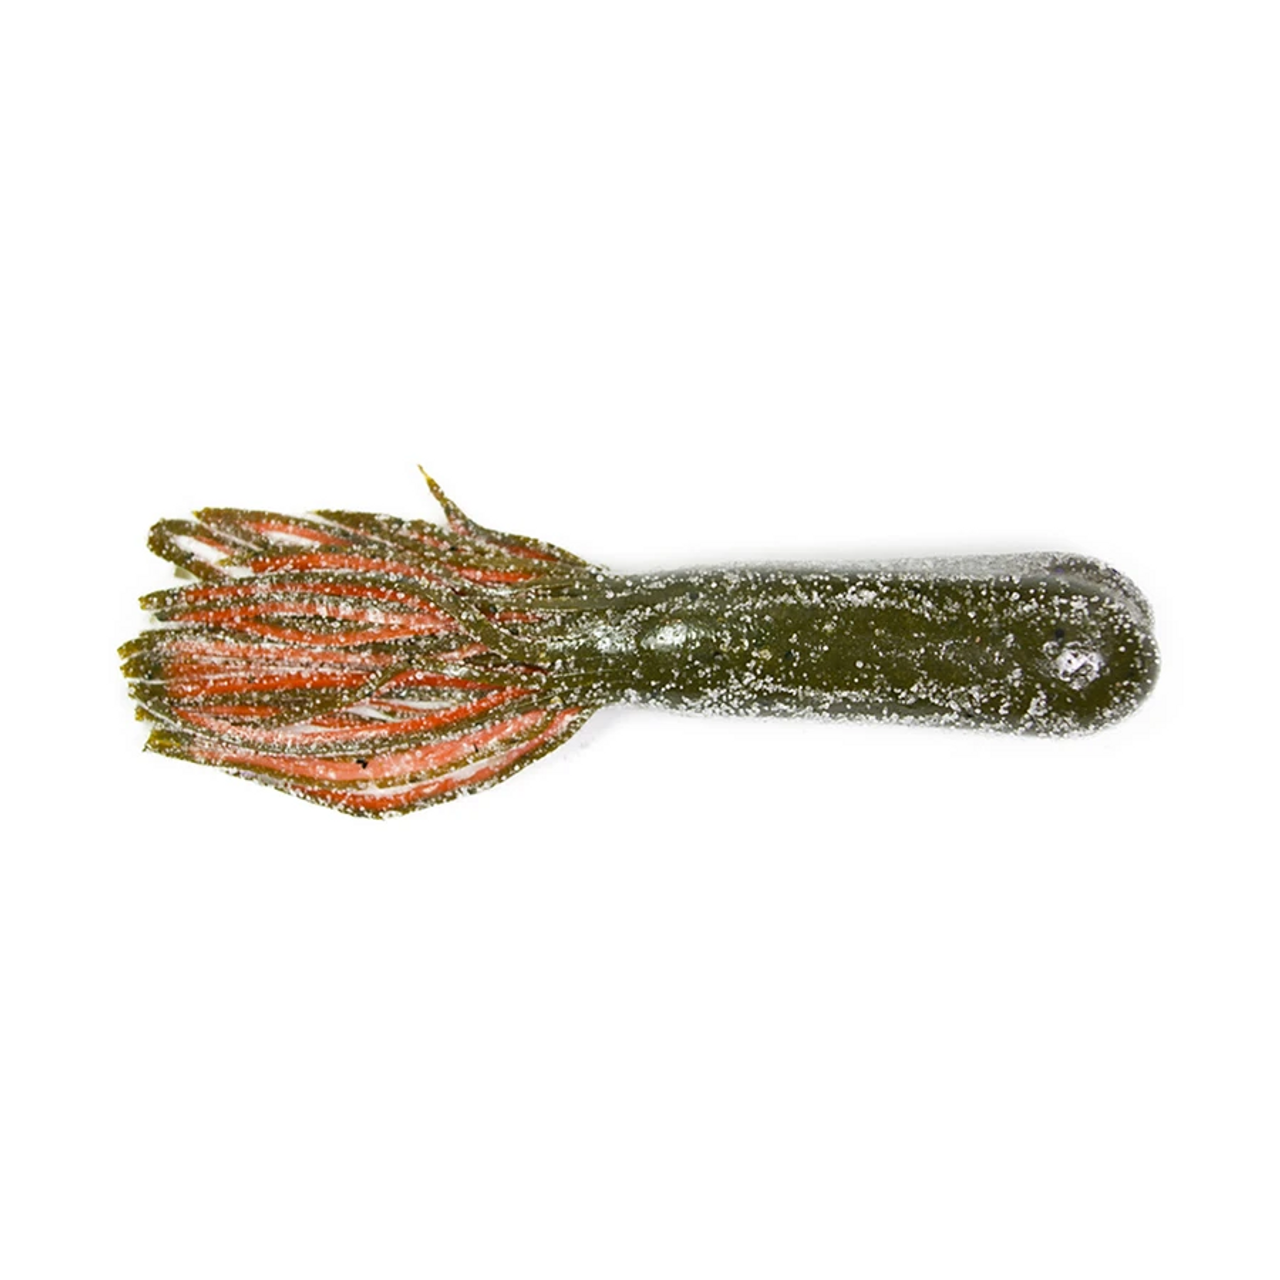 Lunkerhunt Spicy Revealer Tubes, 4.25", Crawfish, 6 Pk